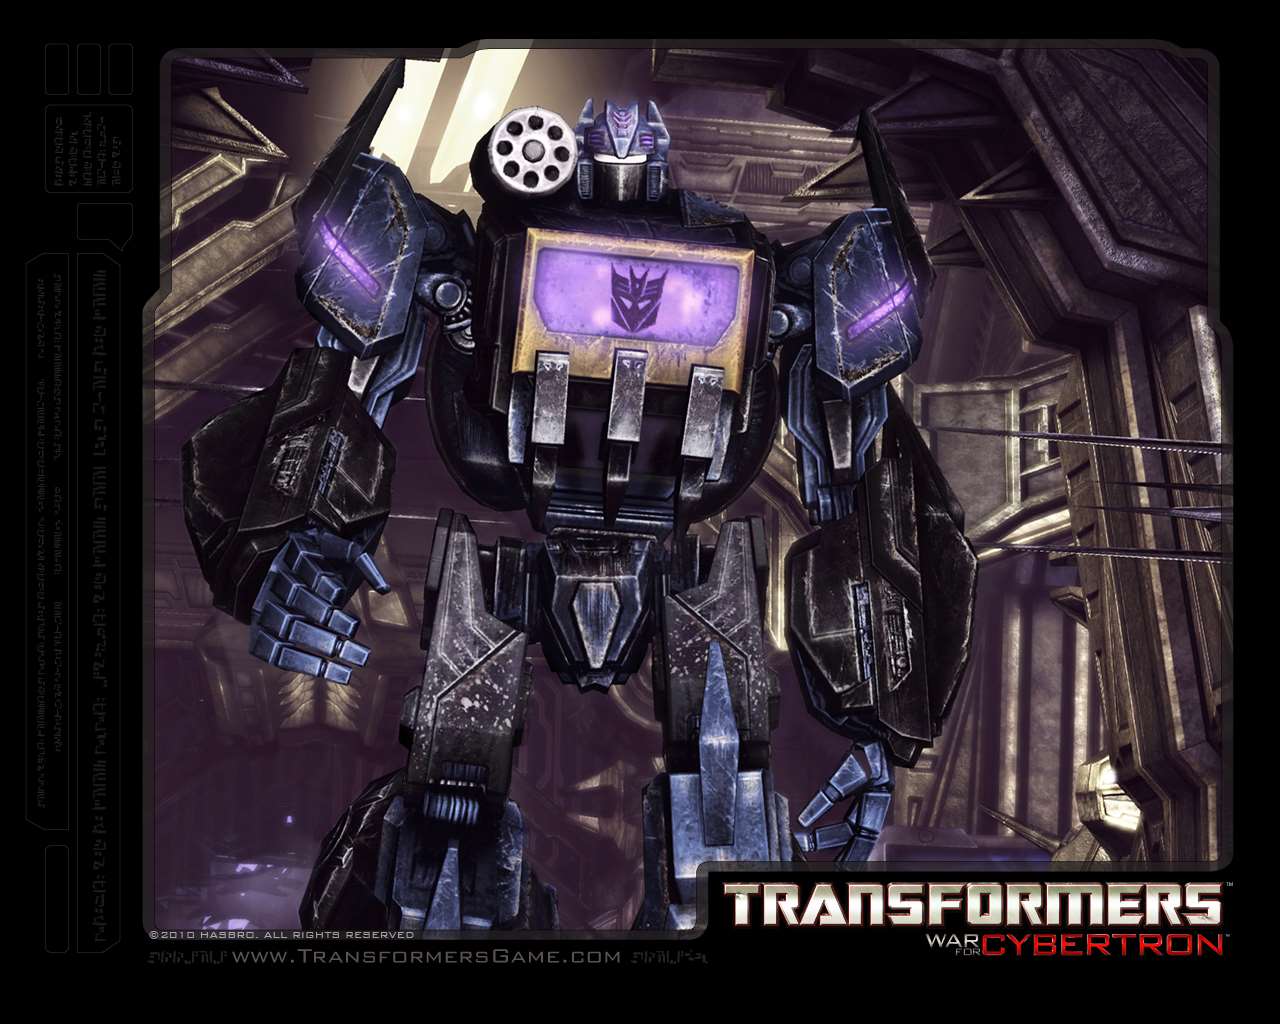 Transformers Soundwave Wallpaper .wallpaperaccess.com